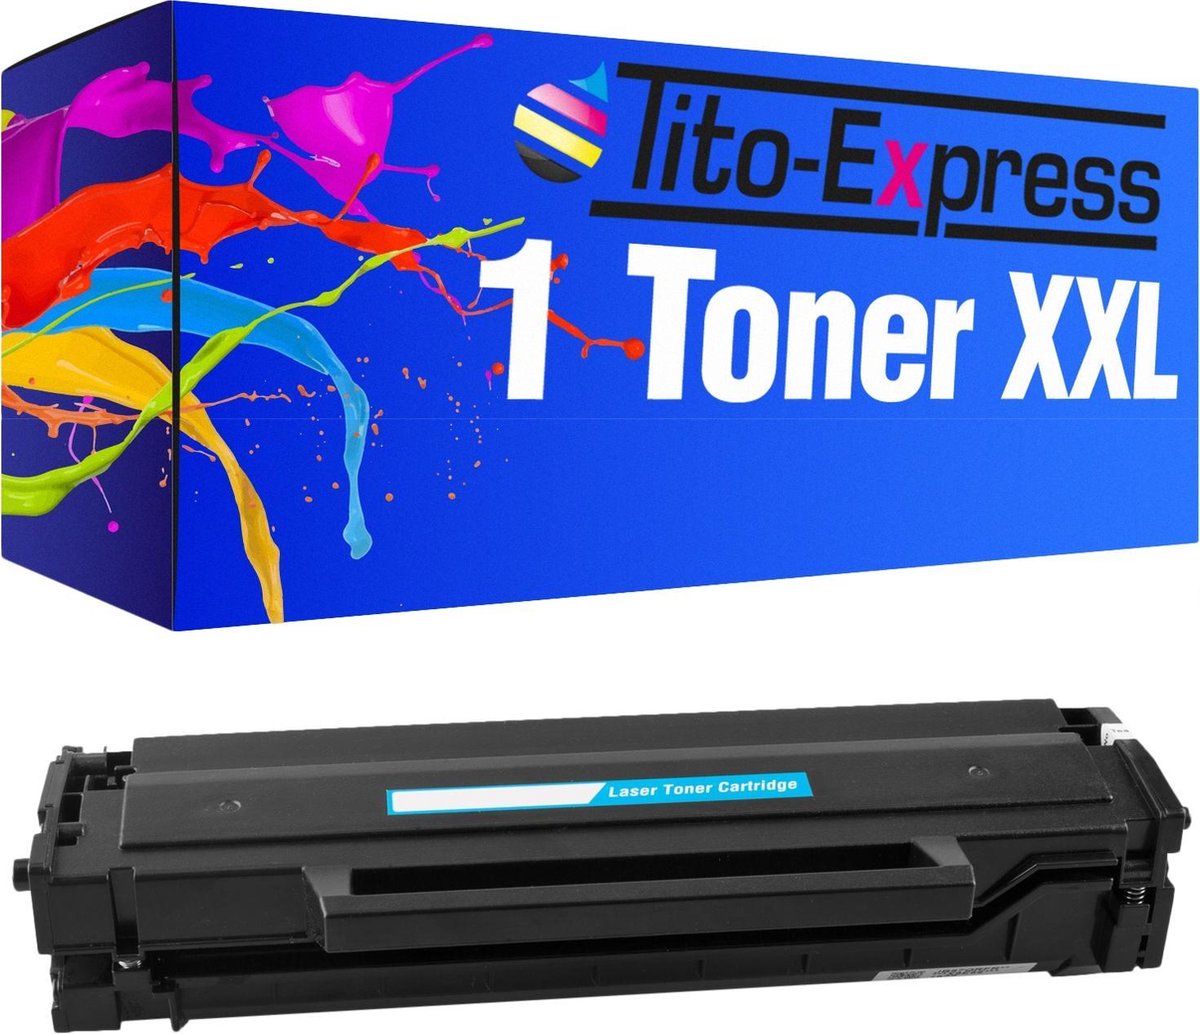 Tito-Express 1x toner cartridge zwart alternatief voor Samsung MLT-D111S Samsung Xpress M2020 M2070 M2026W M2022W MLT-D111S M2070W M2070FW - Tito-EXpress